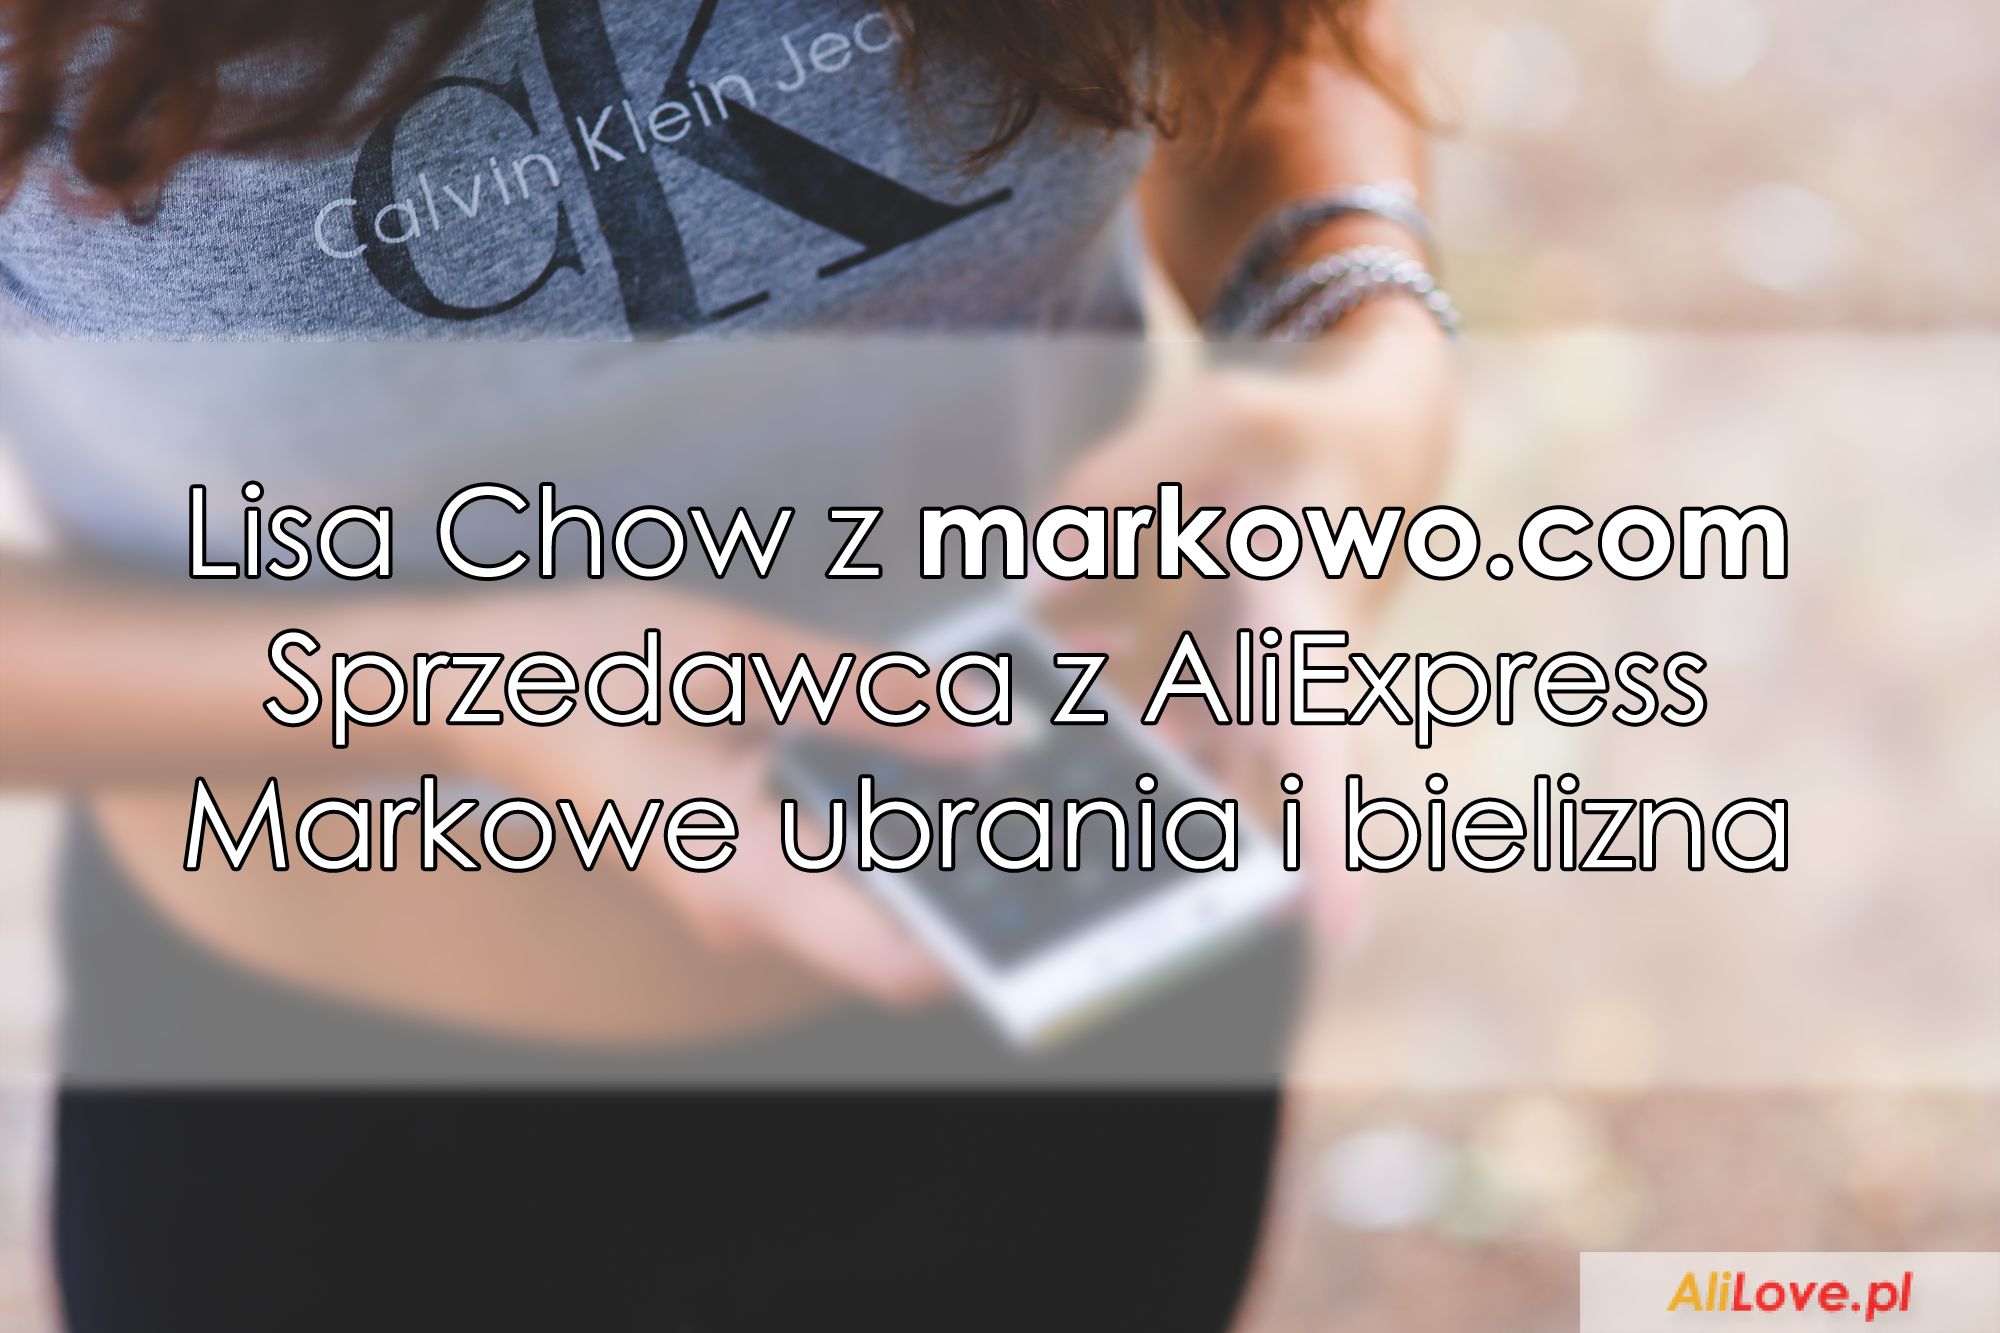 Lisa Chow z markowo.com na AliExpress - AliLove.pl